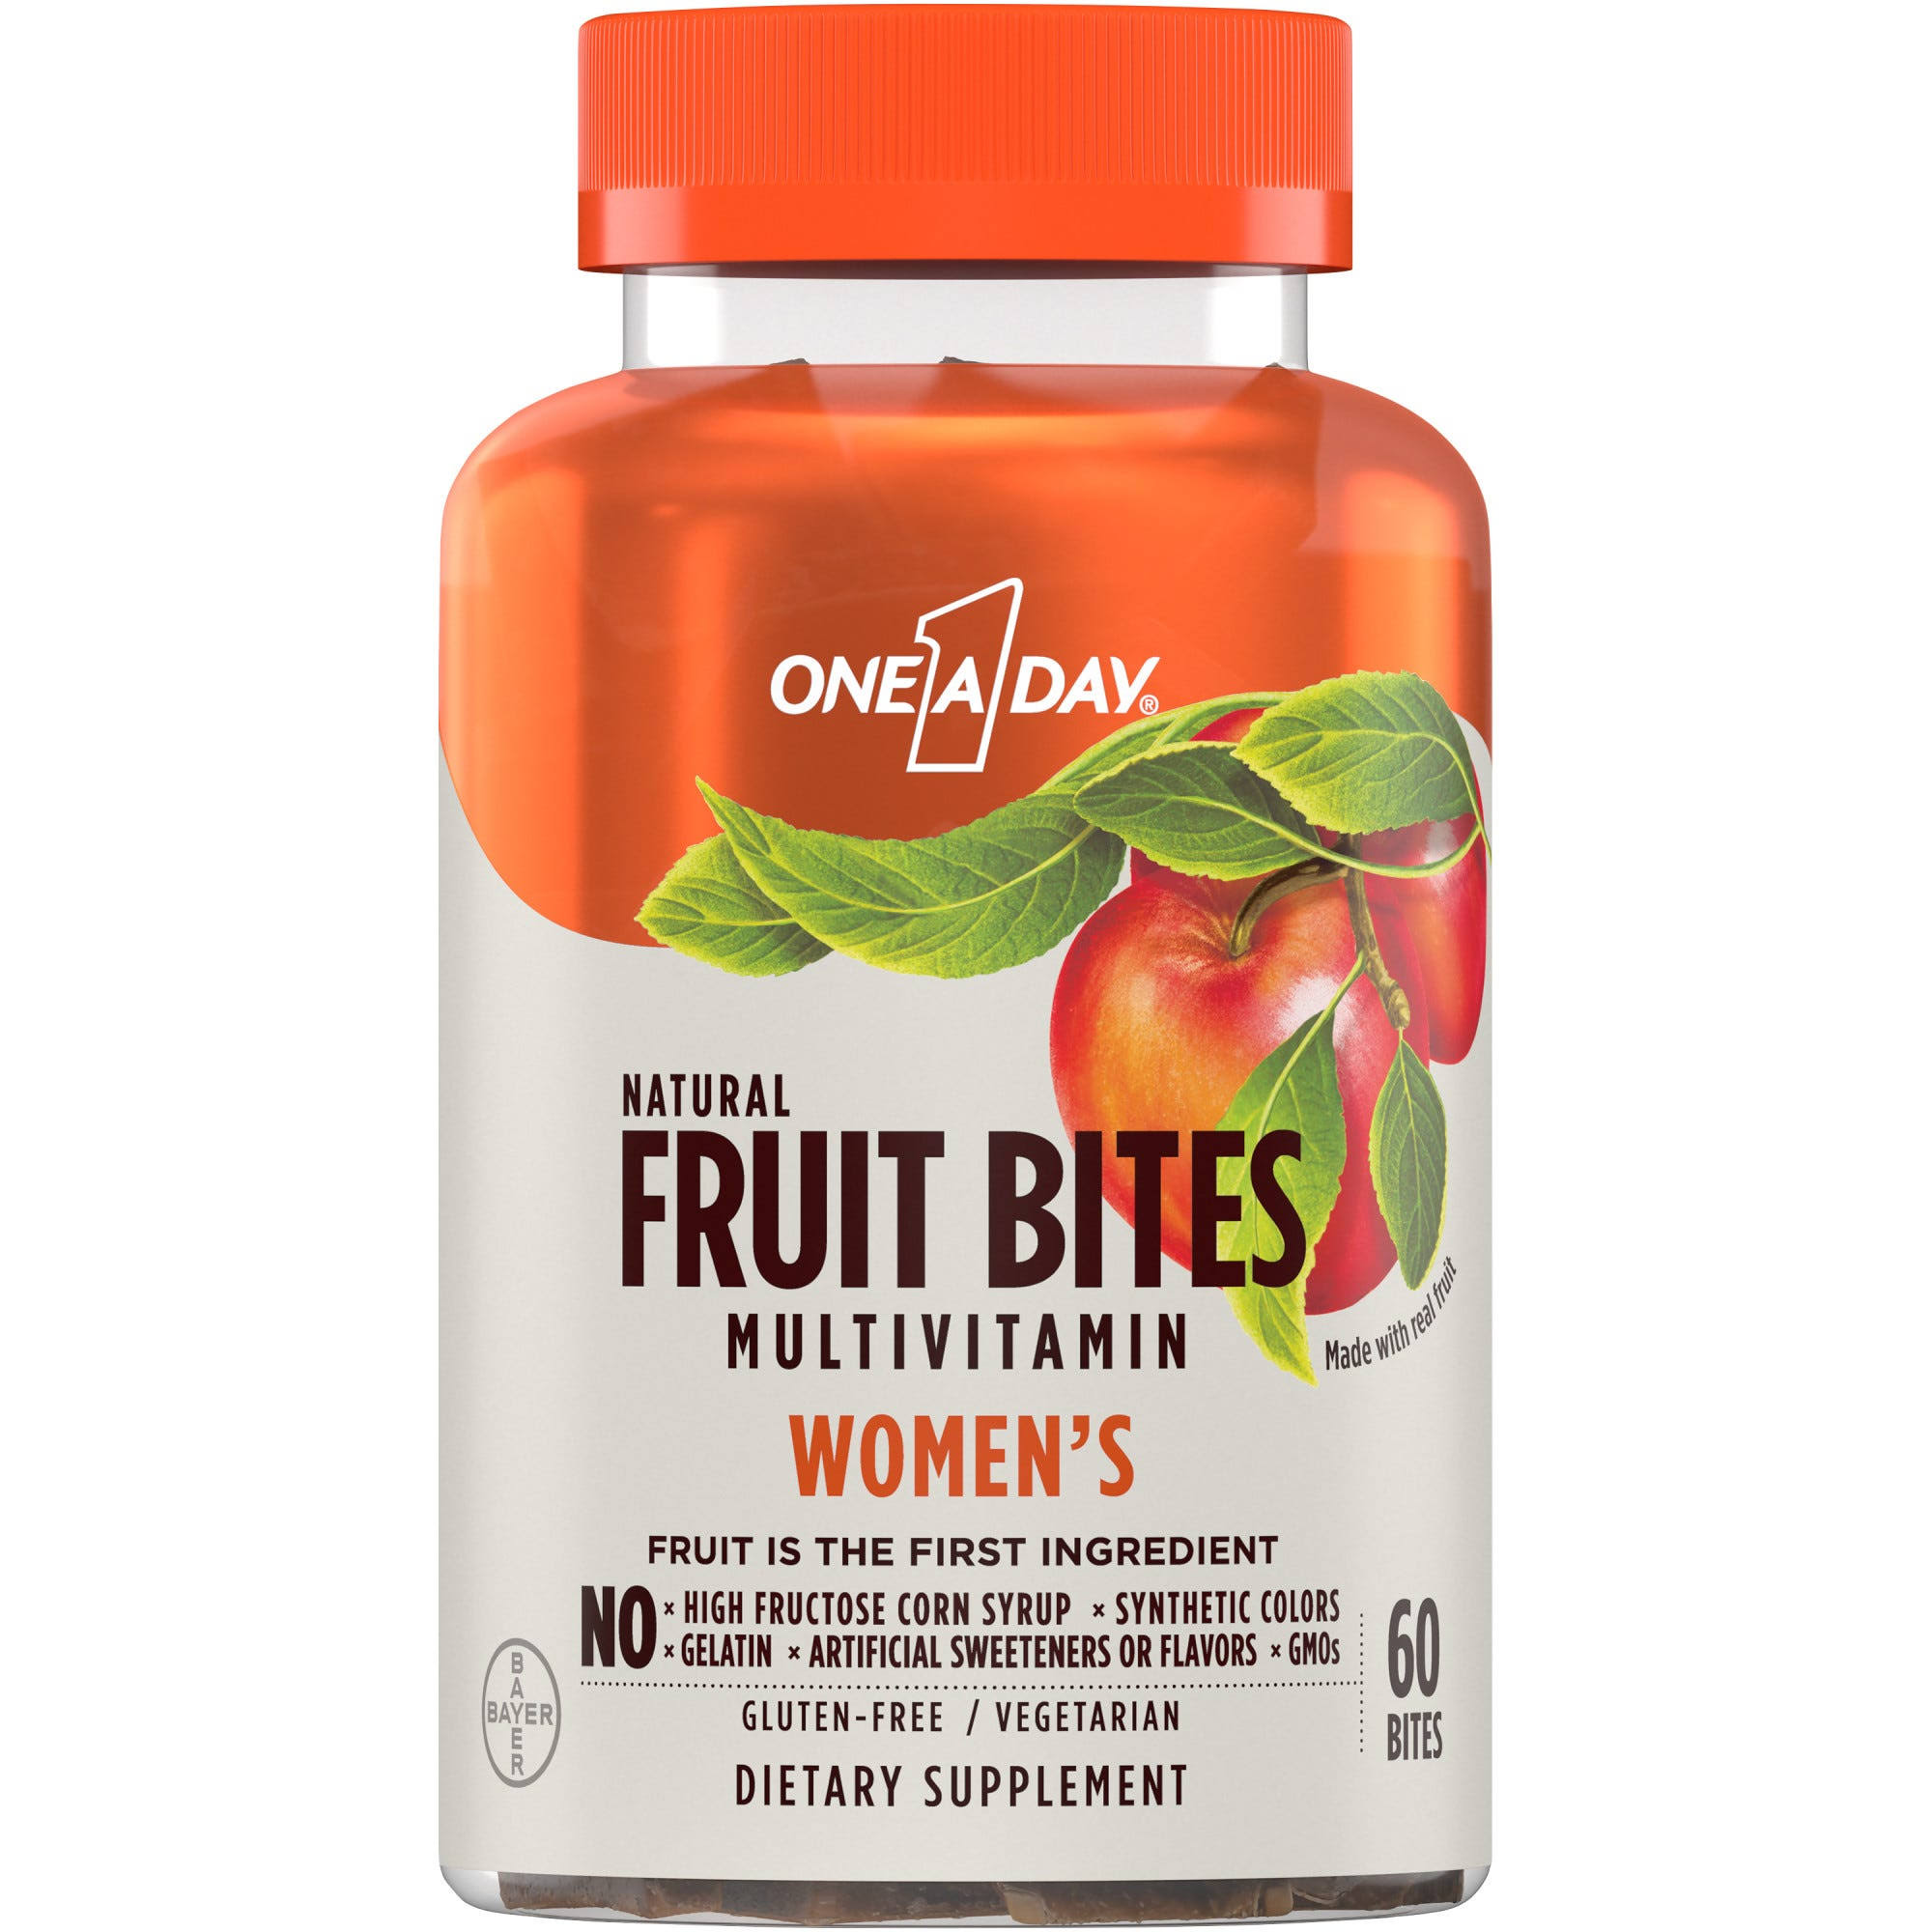 One-A-Day, Women's, Fruit Bites Multivitamin, Natural Fruit, 60 Bites